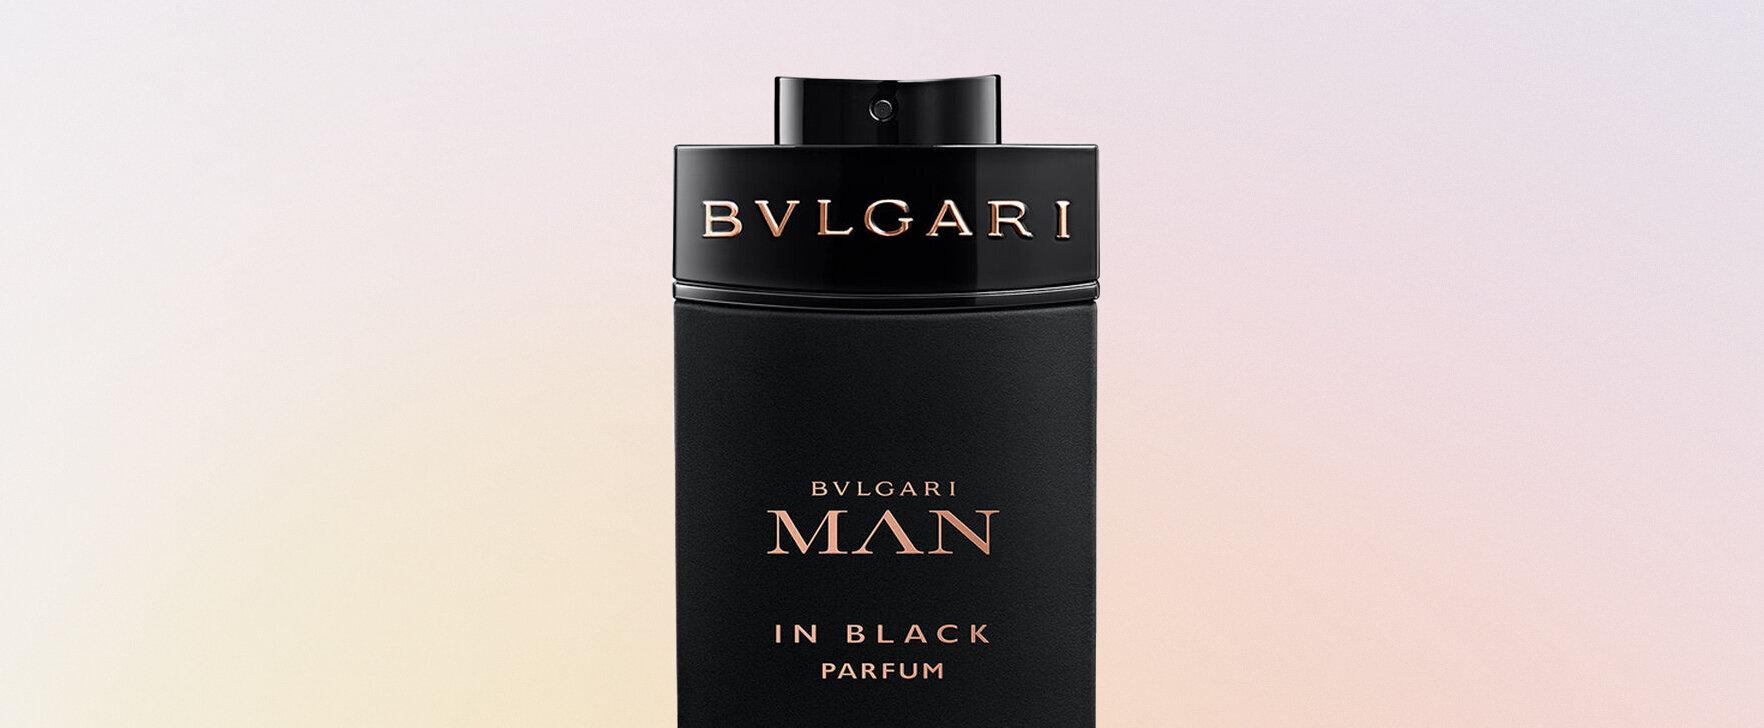 A New Dimension of Intensity: Bvlgari Man in Black Parfum by Bvlgari